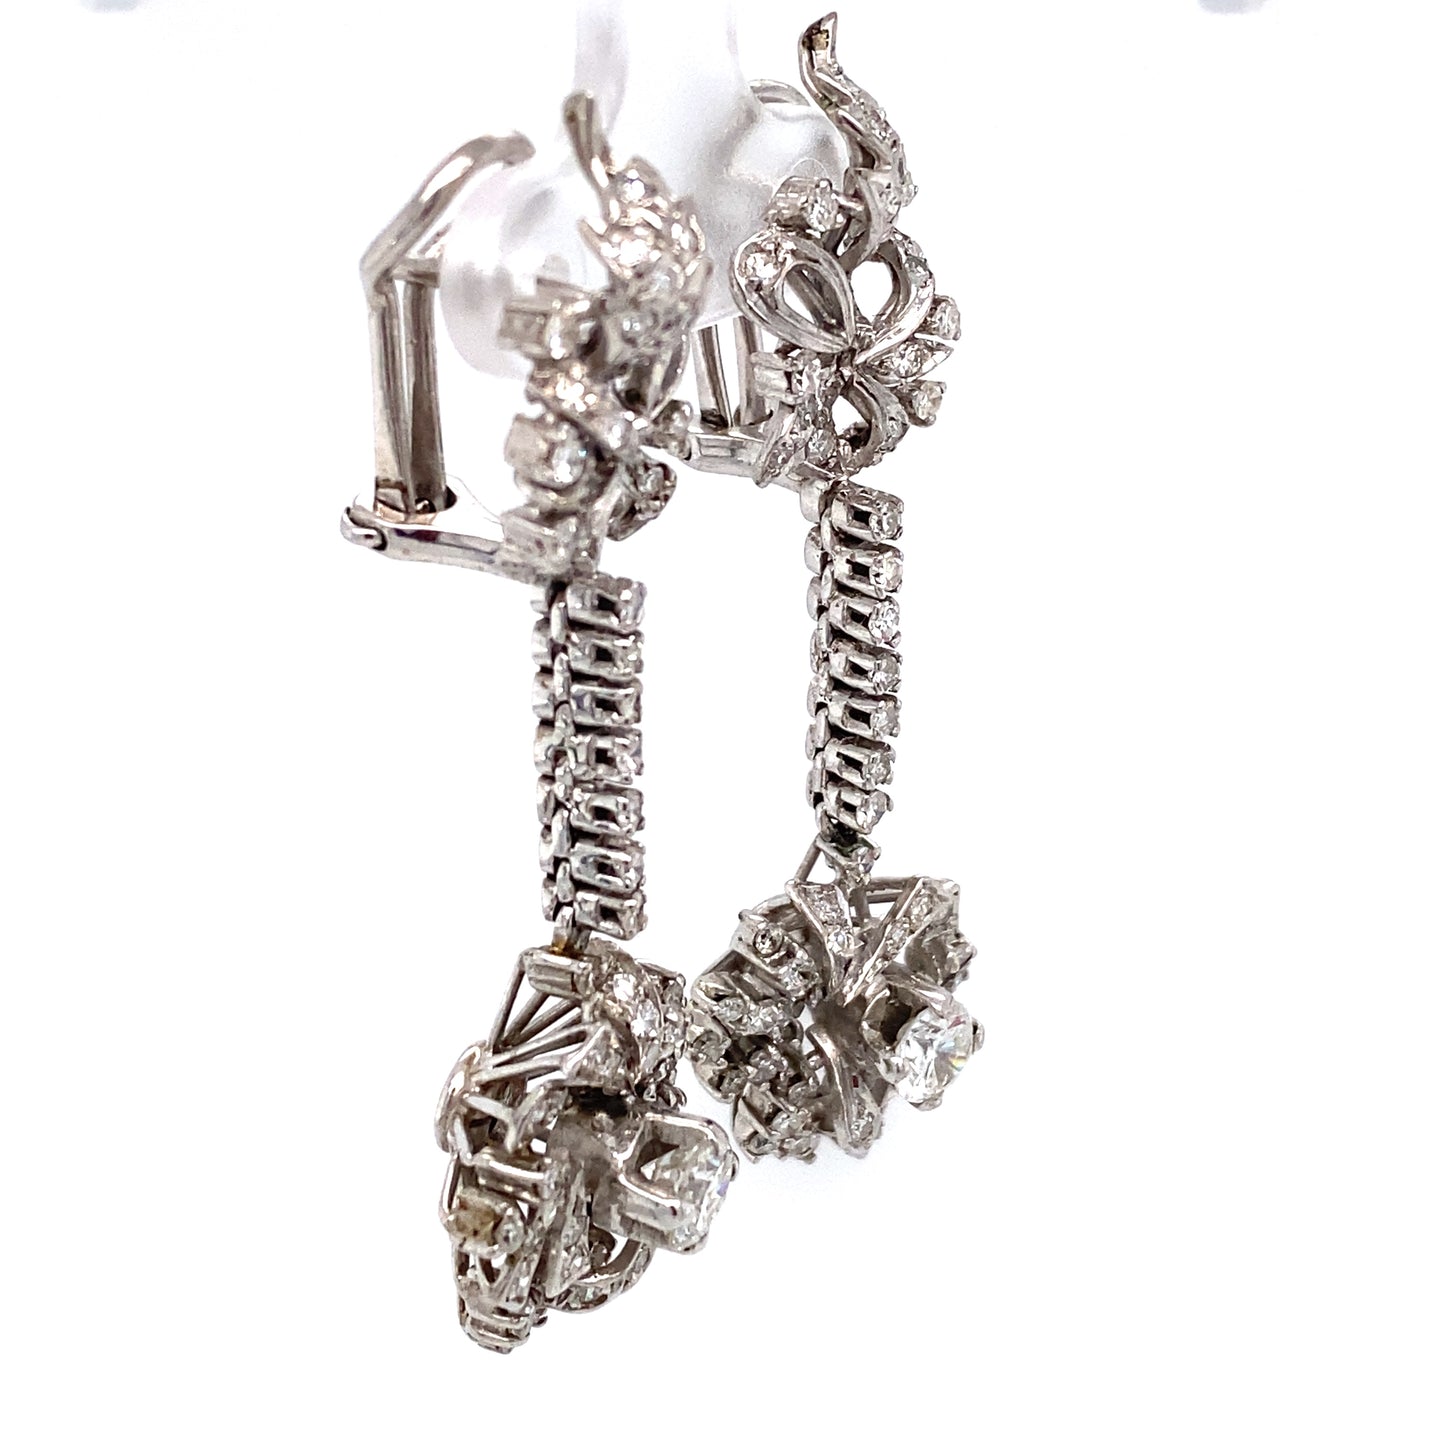 Circa 1930s 4.5 Carat Diamond Dangle Earrings in Platinum